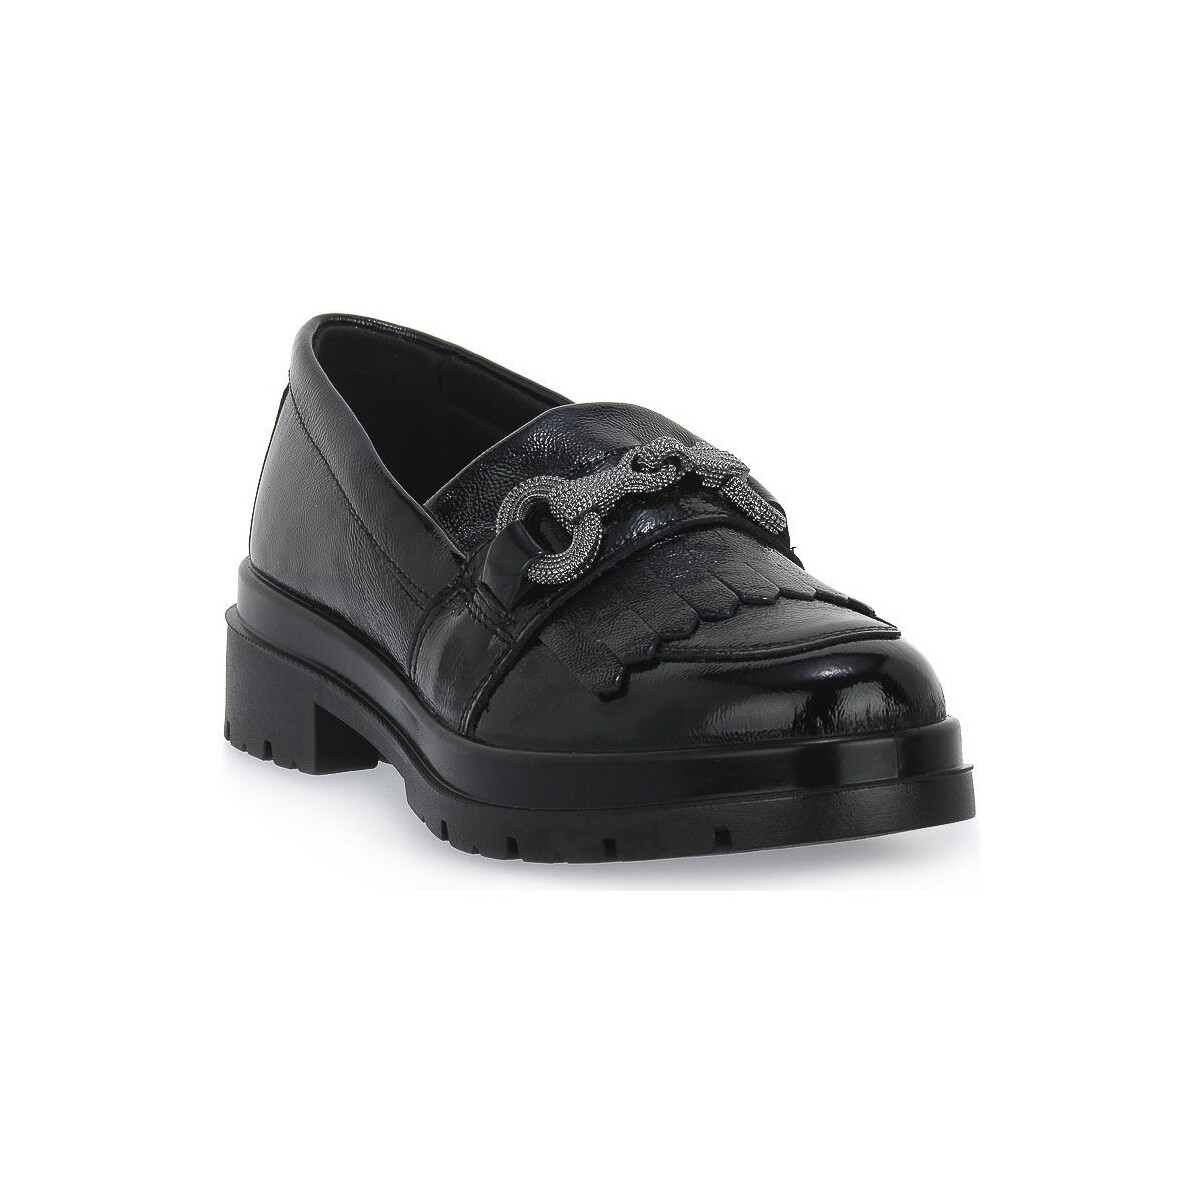 Zapatos Mujer Mocasín Imac FANGO Negro